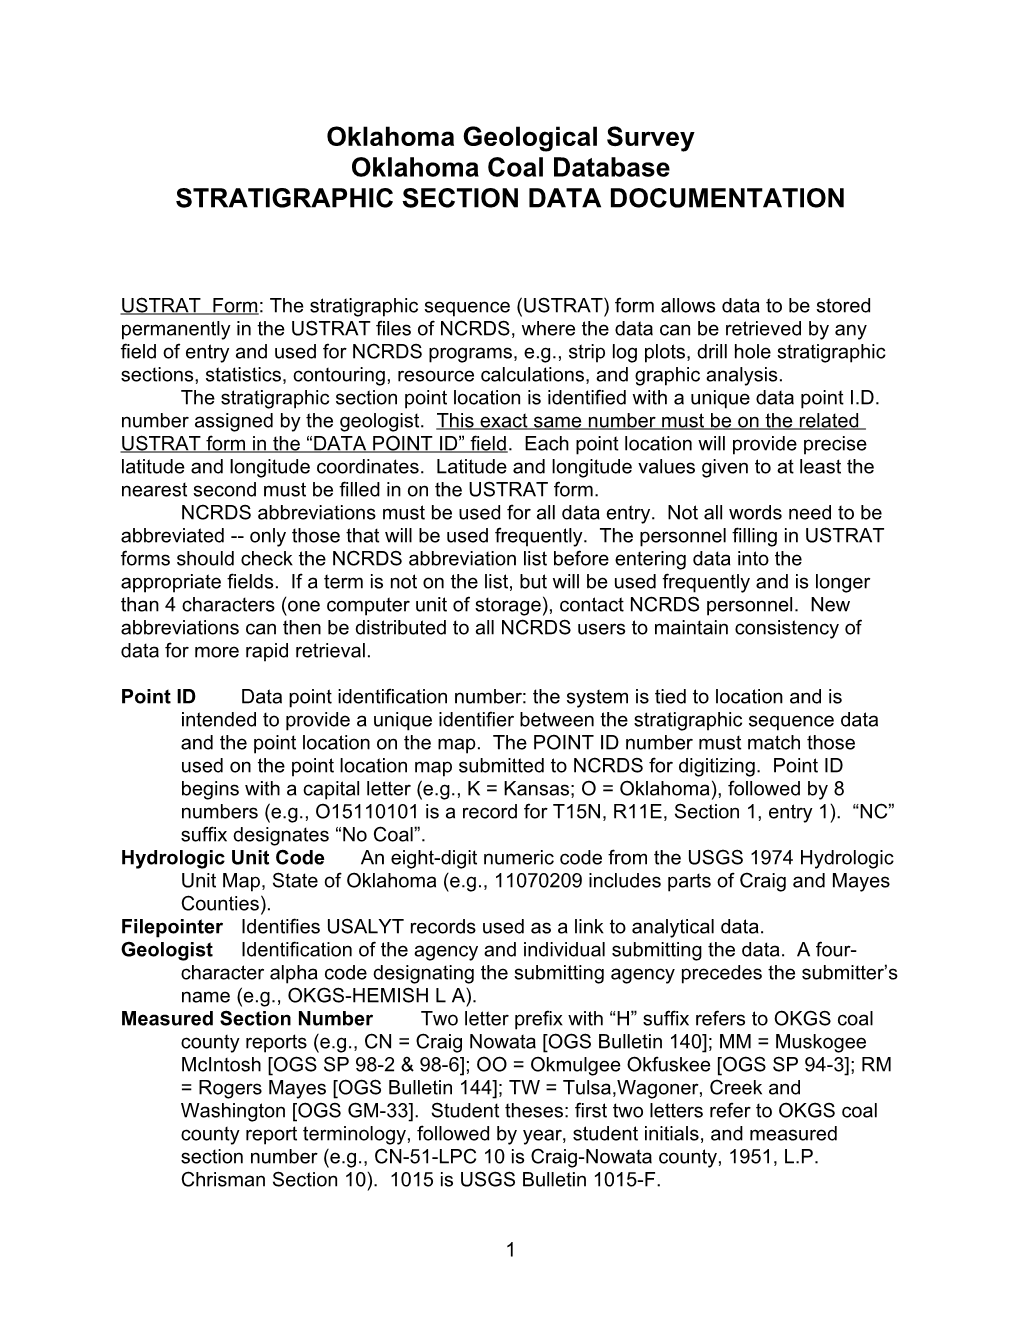 Stratigraphic Table Documentation